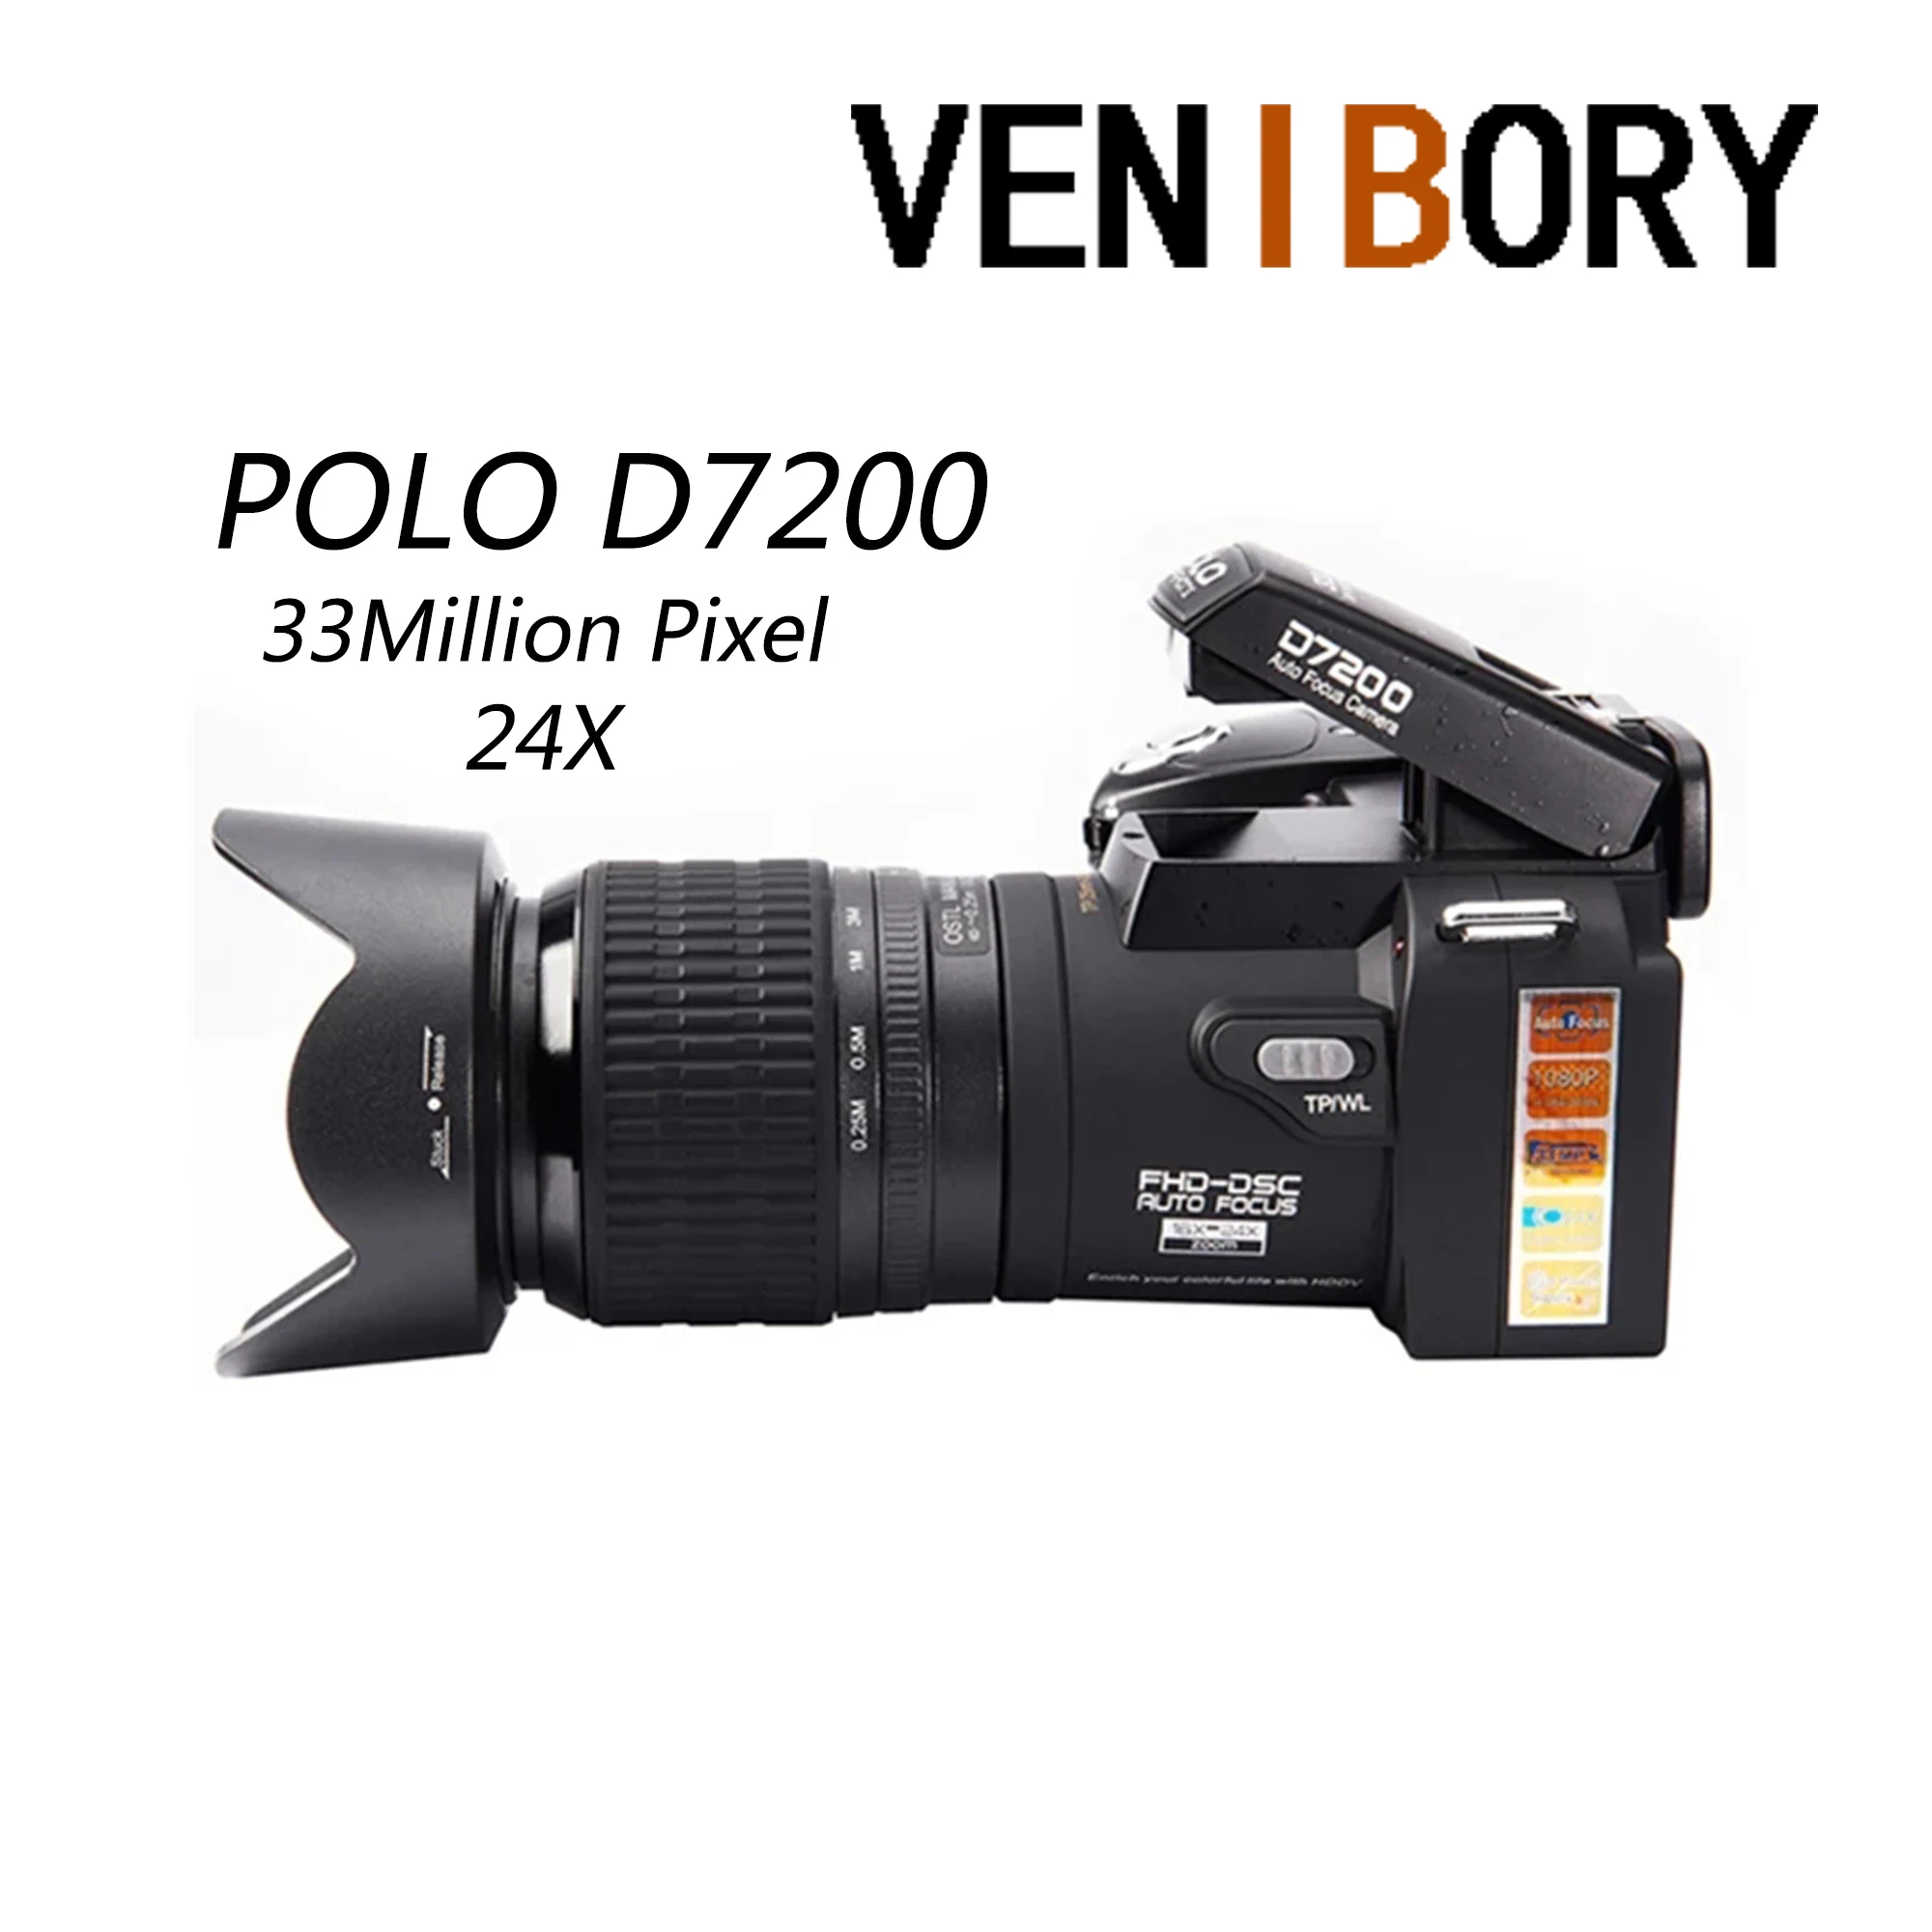 VENIBORY 2022 Digital Camera HD POLO D7200 33Million Pixel Auto Professional DSLR Video Camera 24X Optical Zoom Three Lens